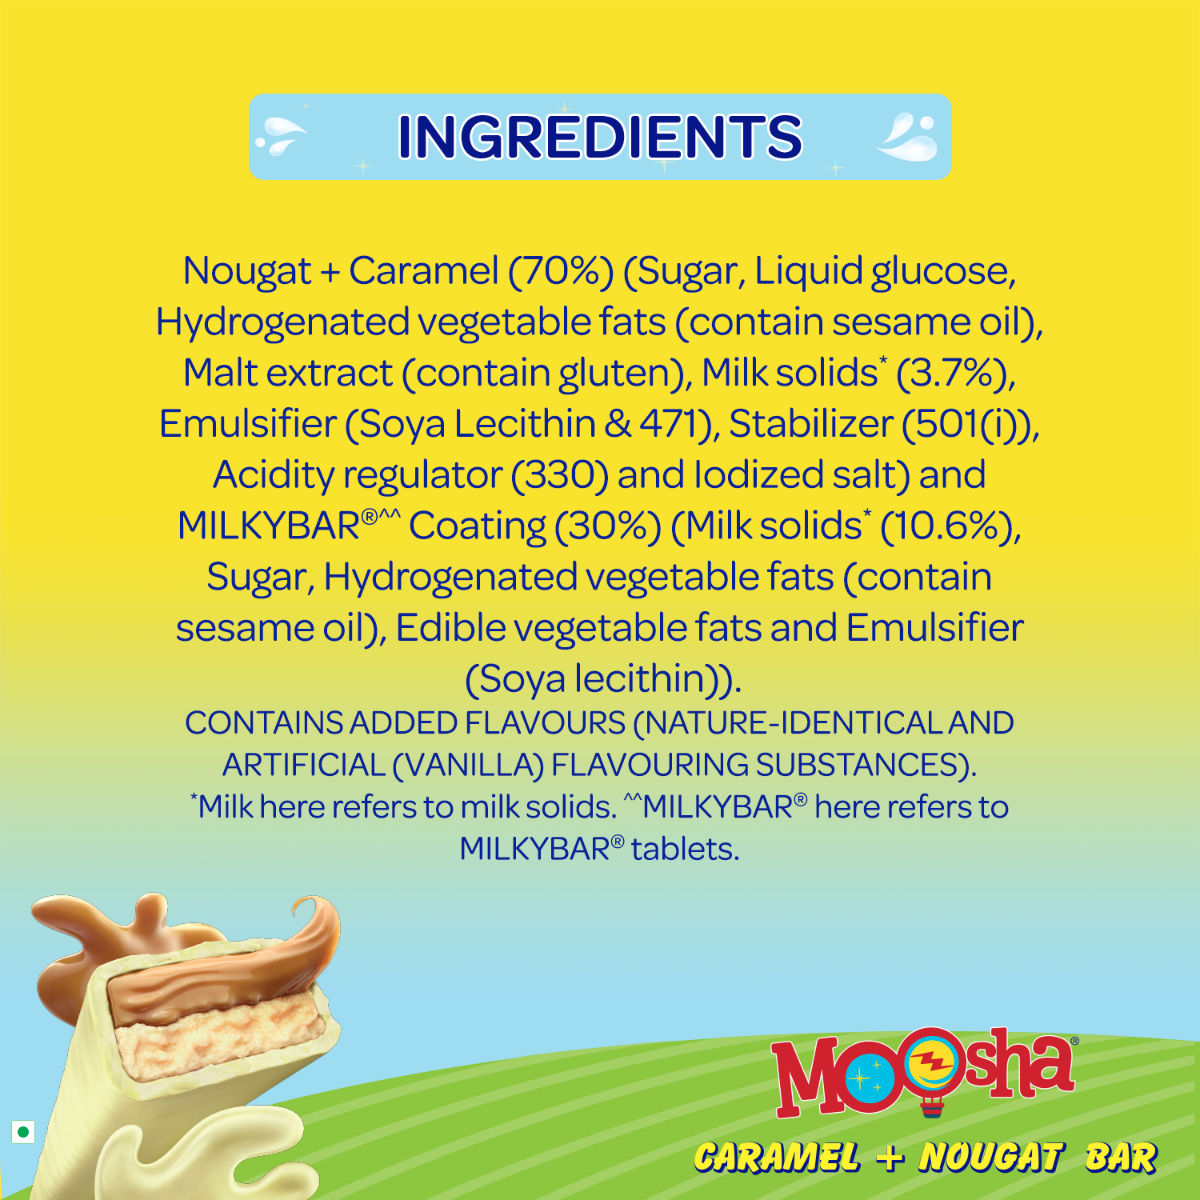 Nestle Milkybar Moosha Caramel+Nougat Bar, 40 gm, Pack of 1 